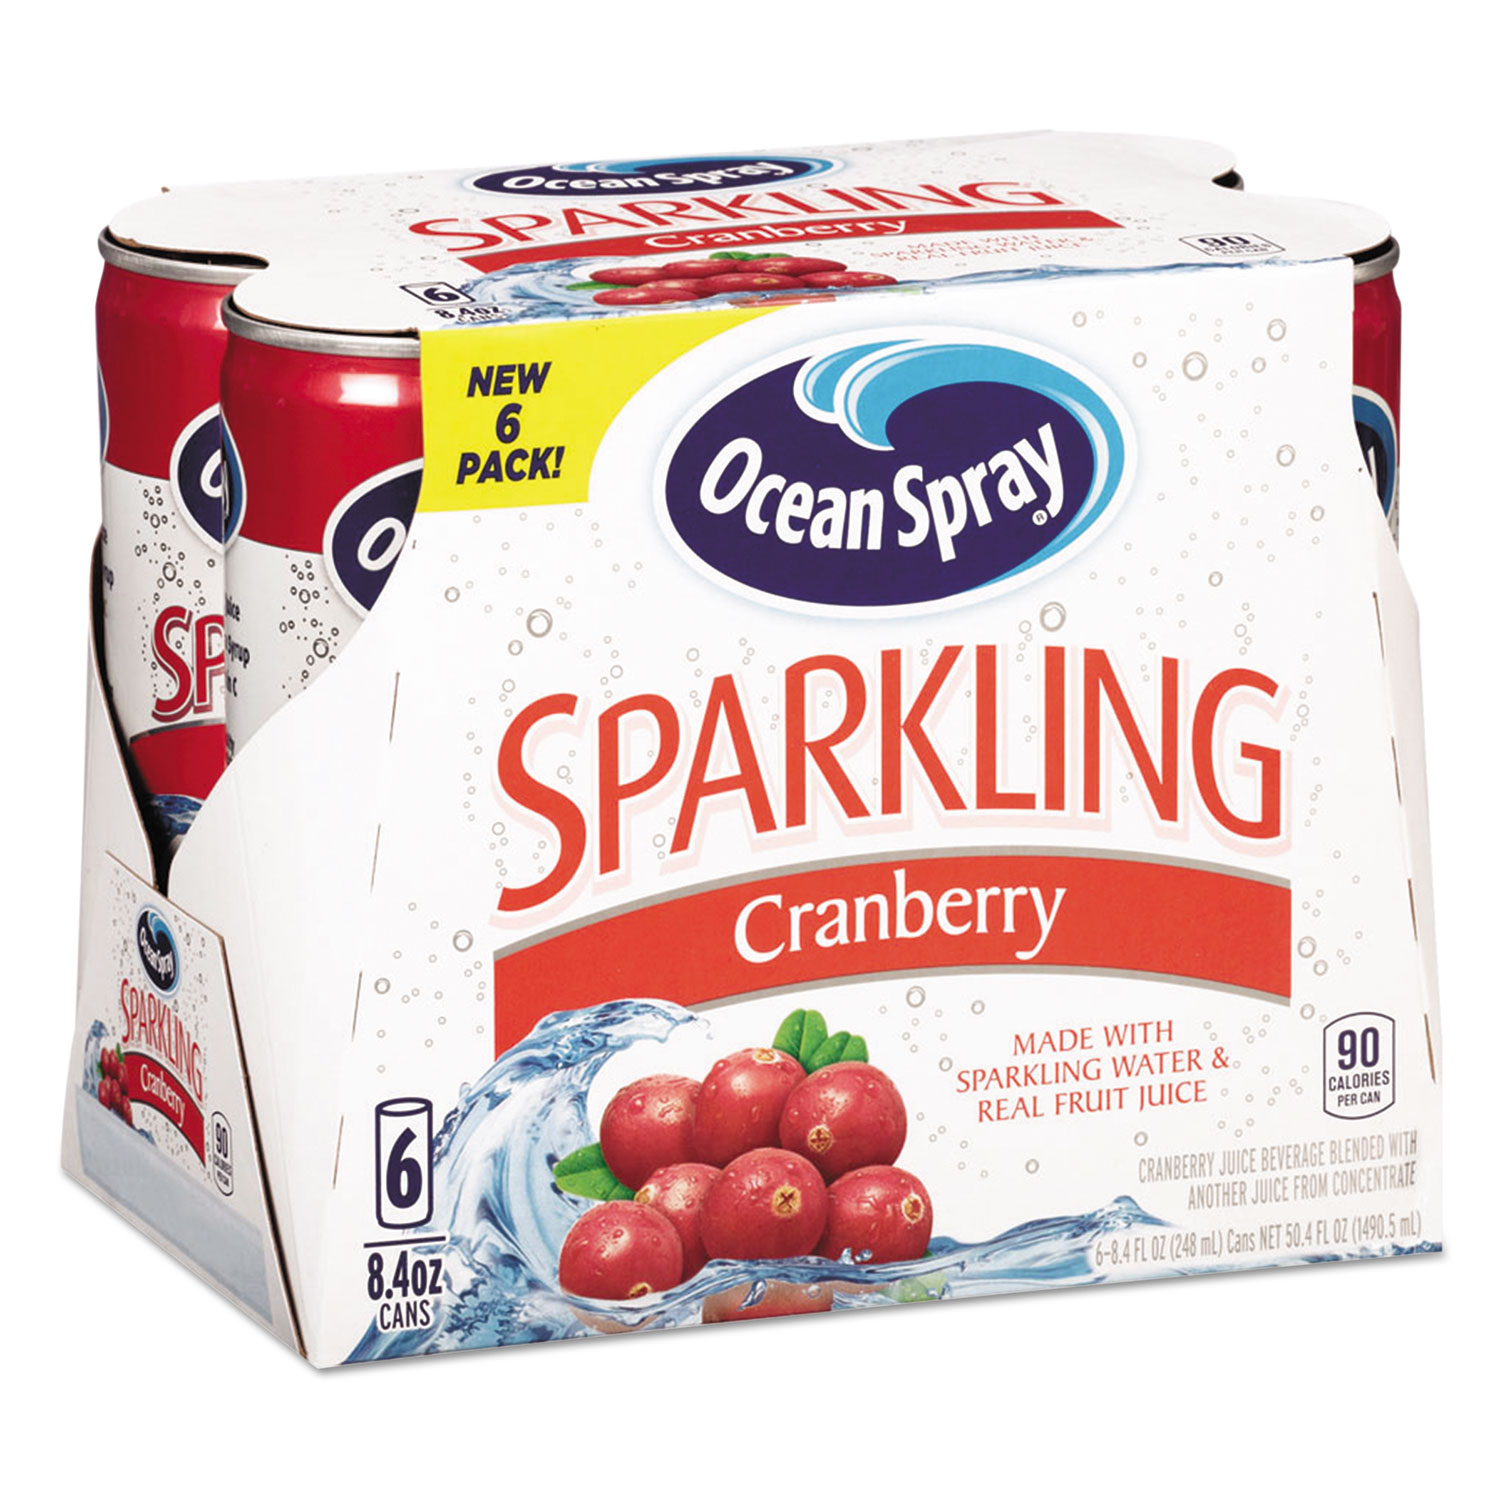 Sparkling Cranberry Juice, 8.4 oz Can, 6/Pack